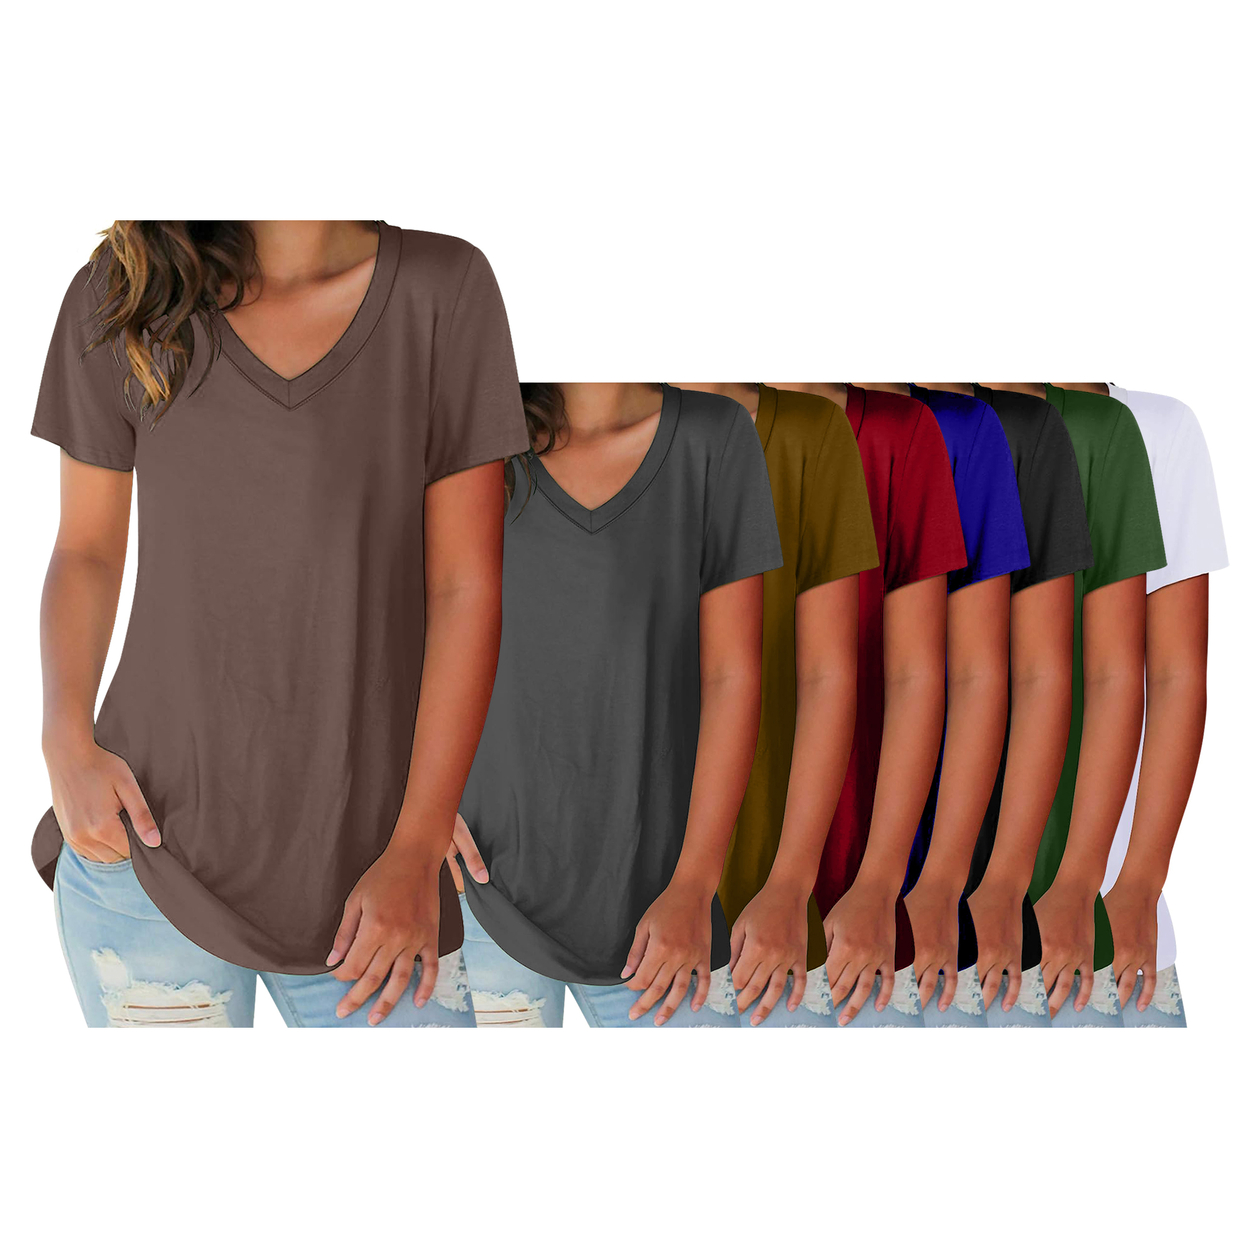 3-Pack: Women's Ultra Soft Smooth Cotton Blend Basic V-Neck Short Sleeve Shirts - Black, Grey, Brown, Small